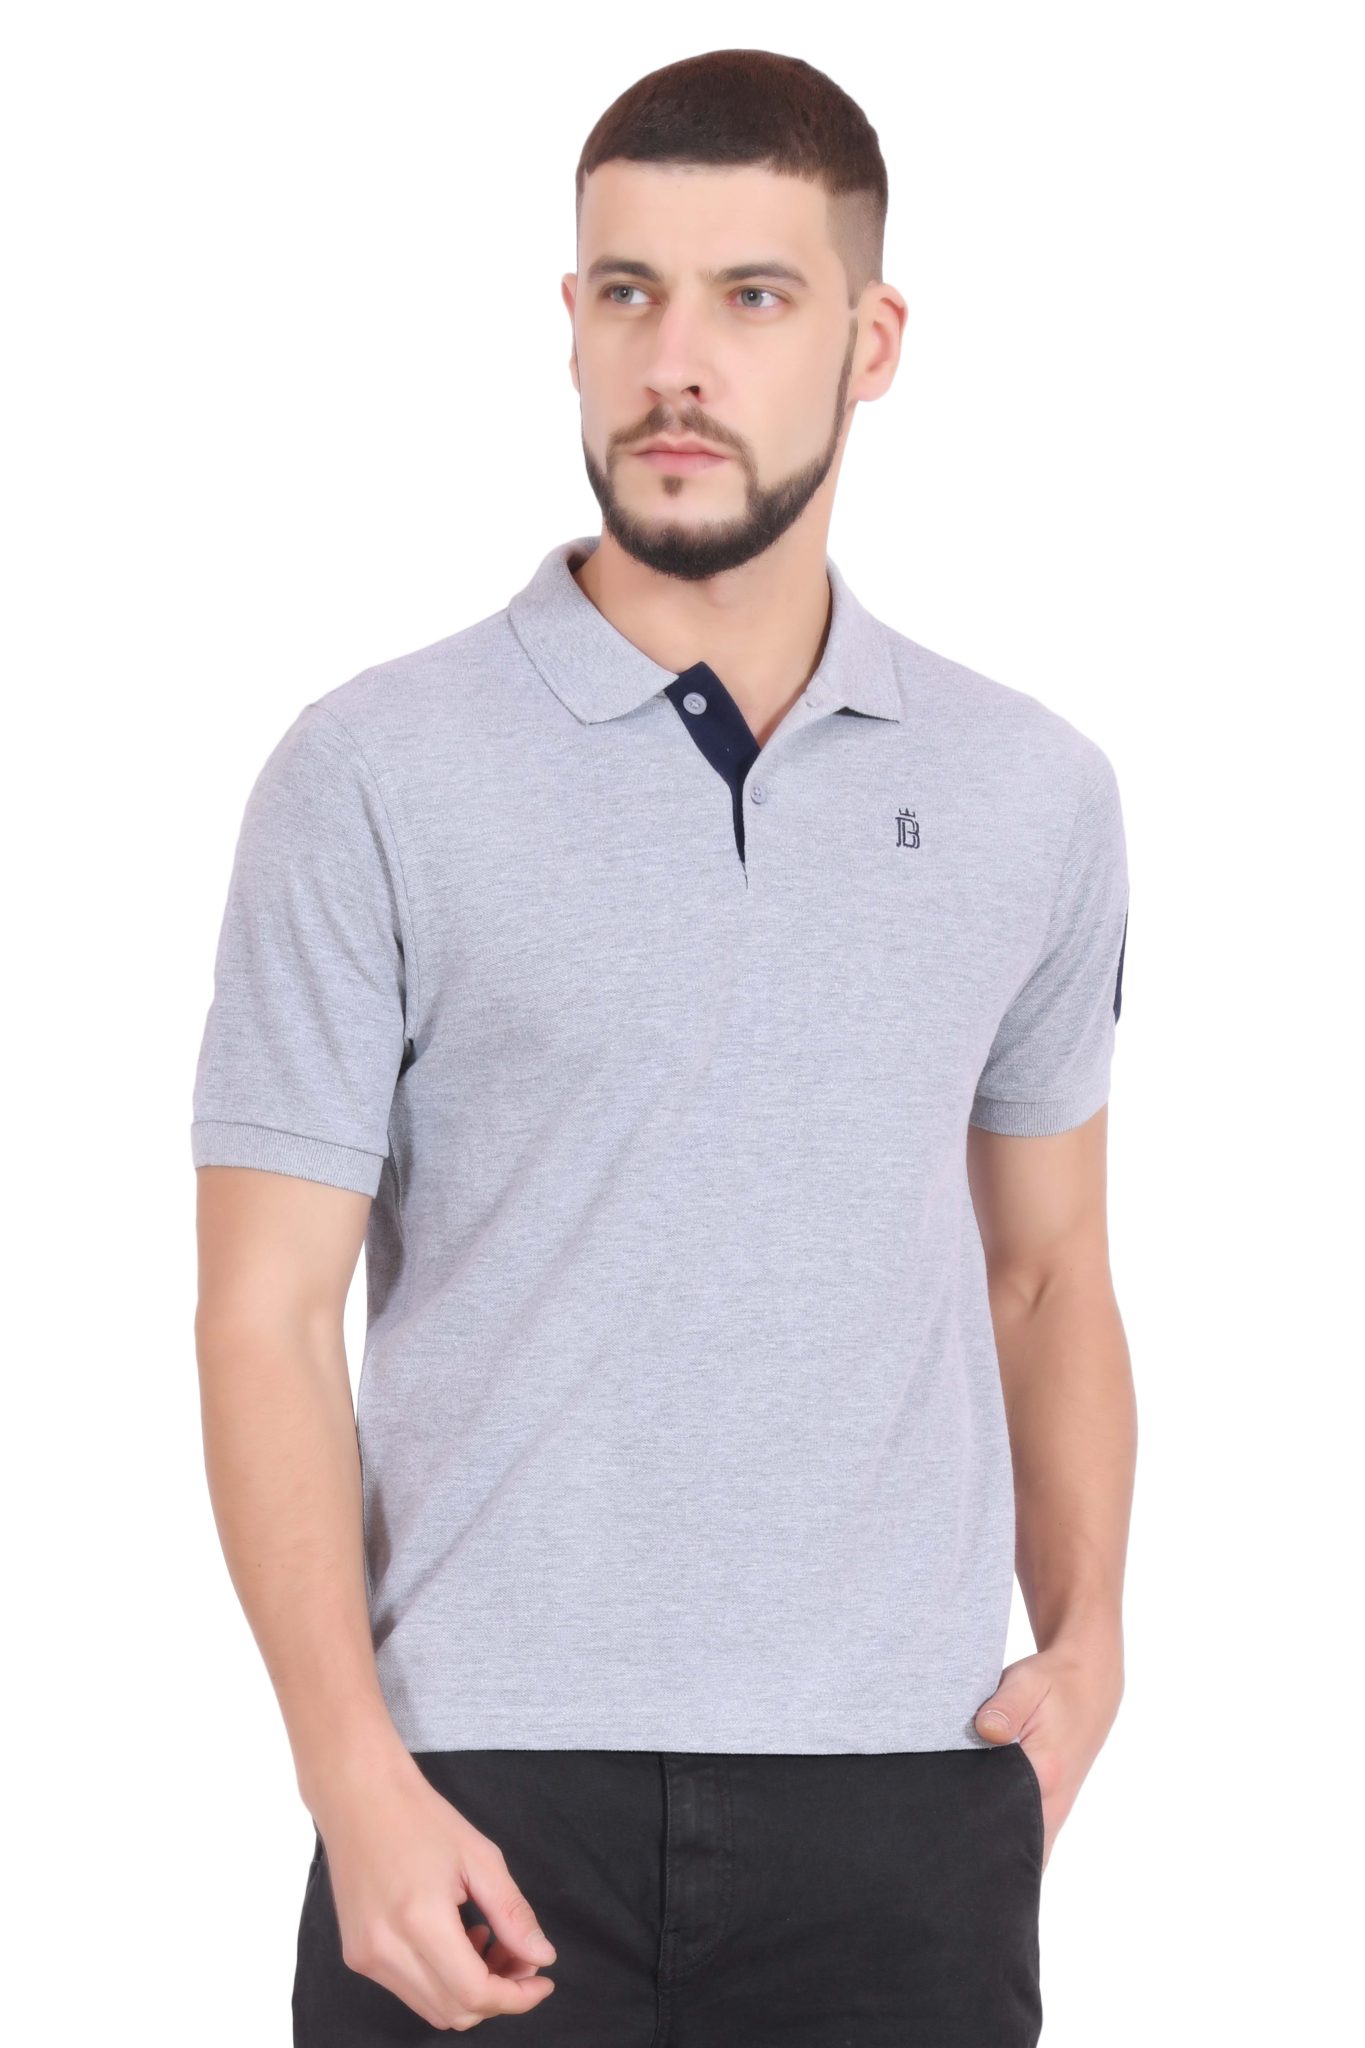 Polo T Shirt Plain | vlr.eng.br